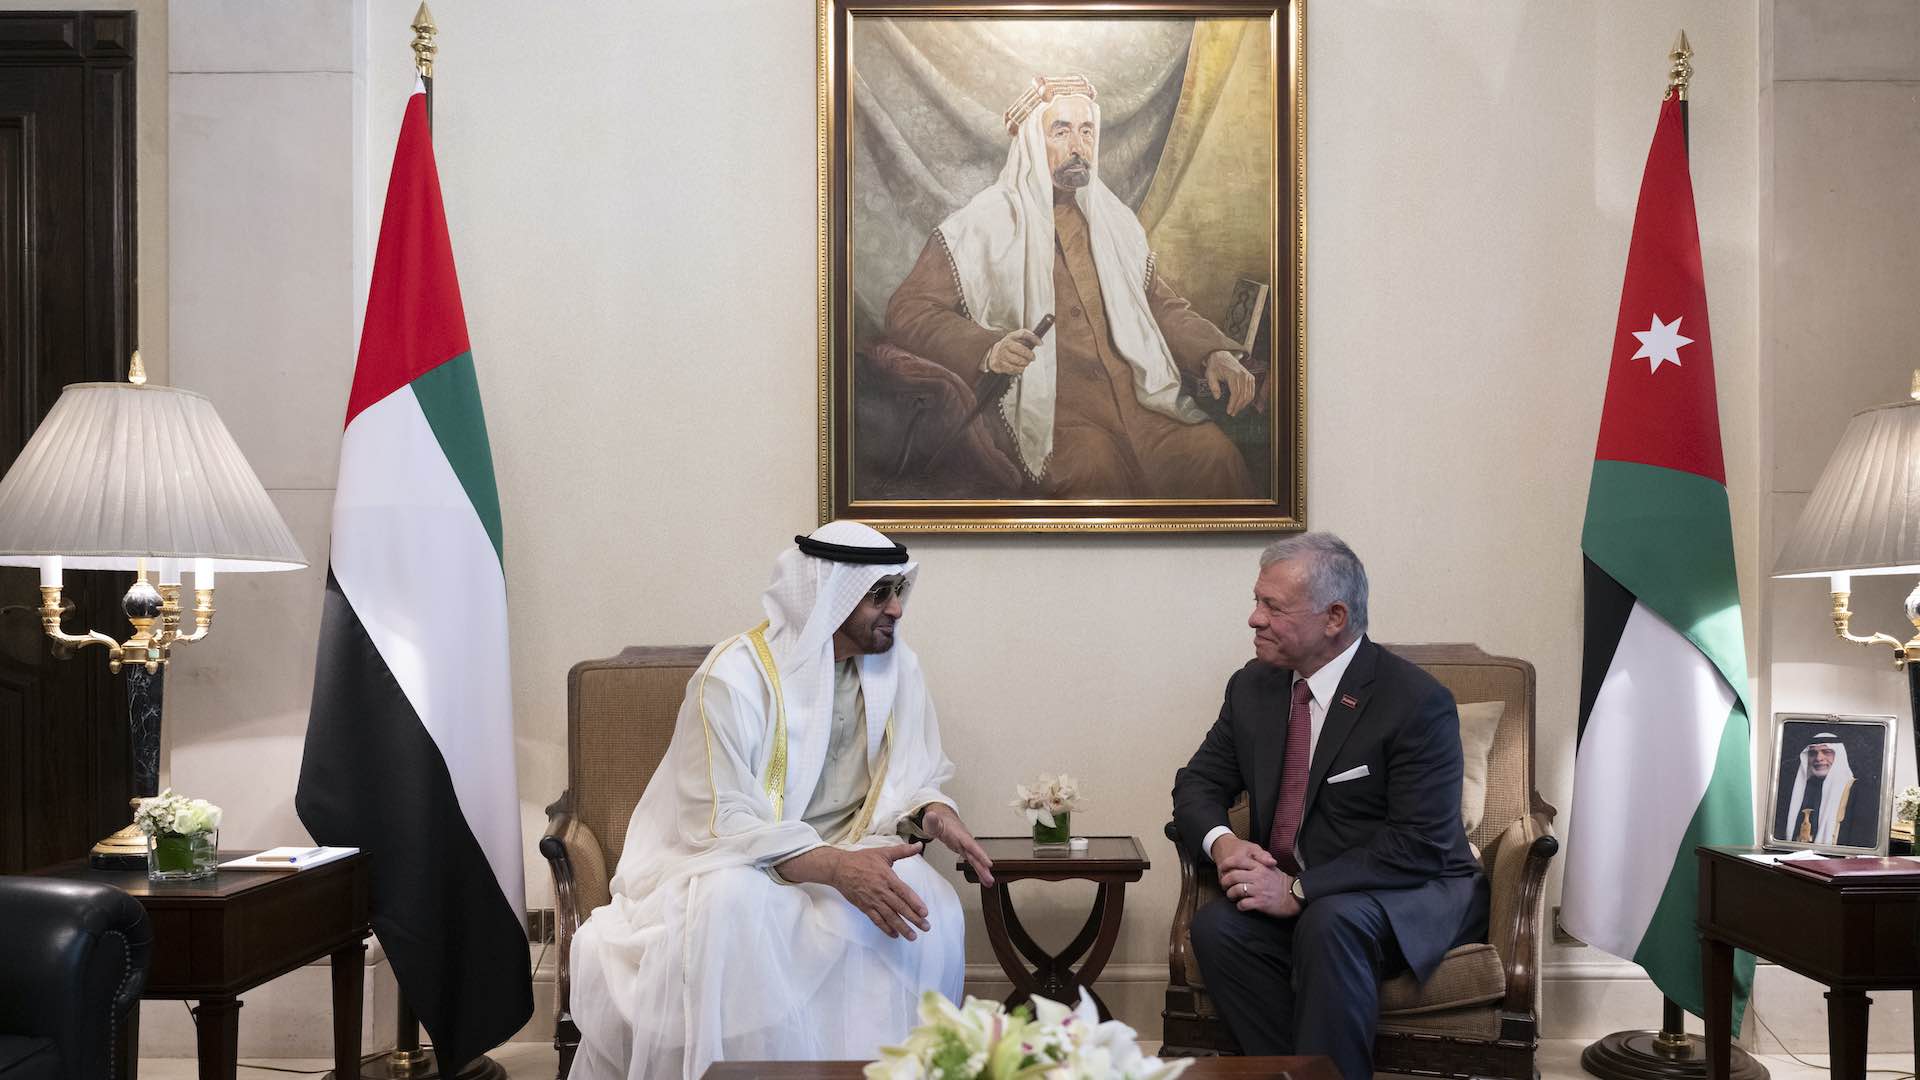 UAE President and Jordanian King meet to fortify bilateral ties